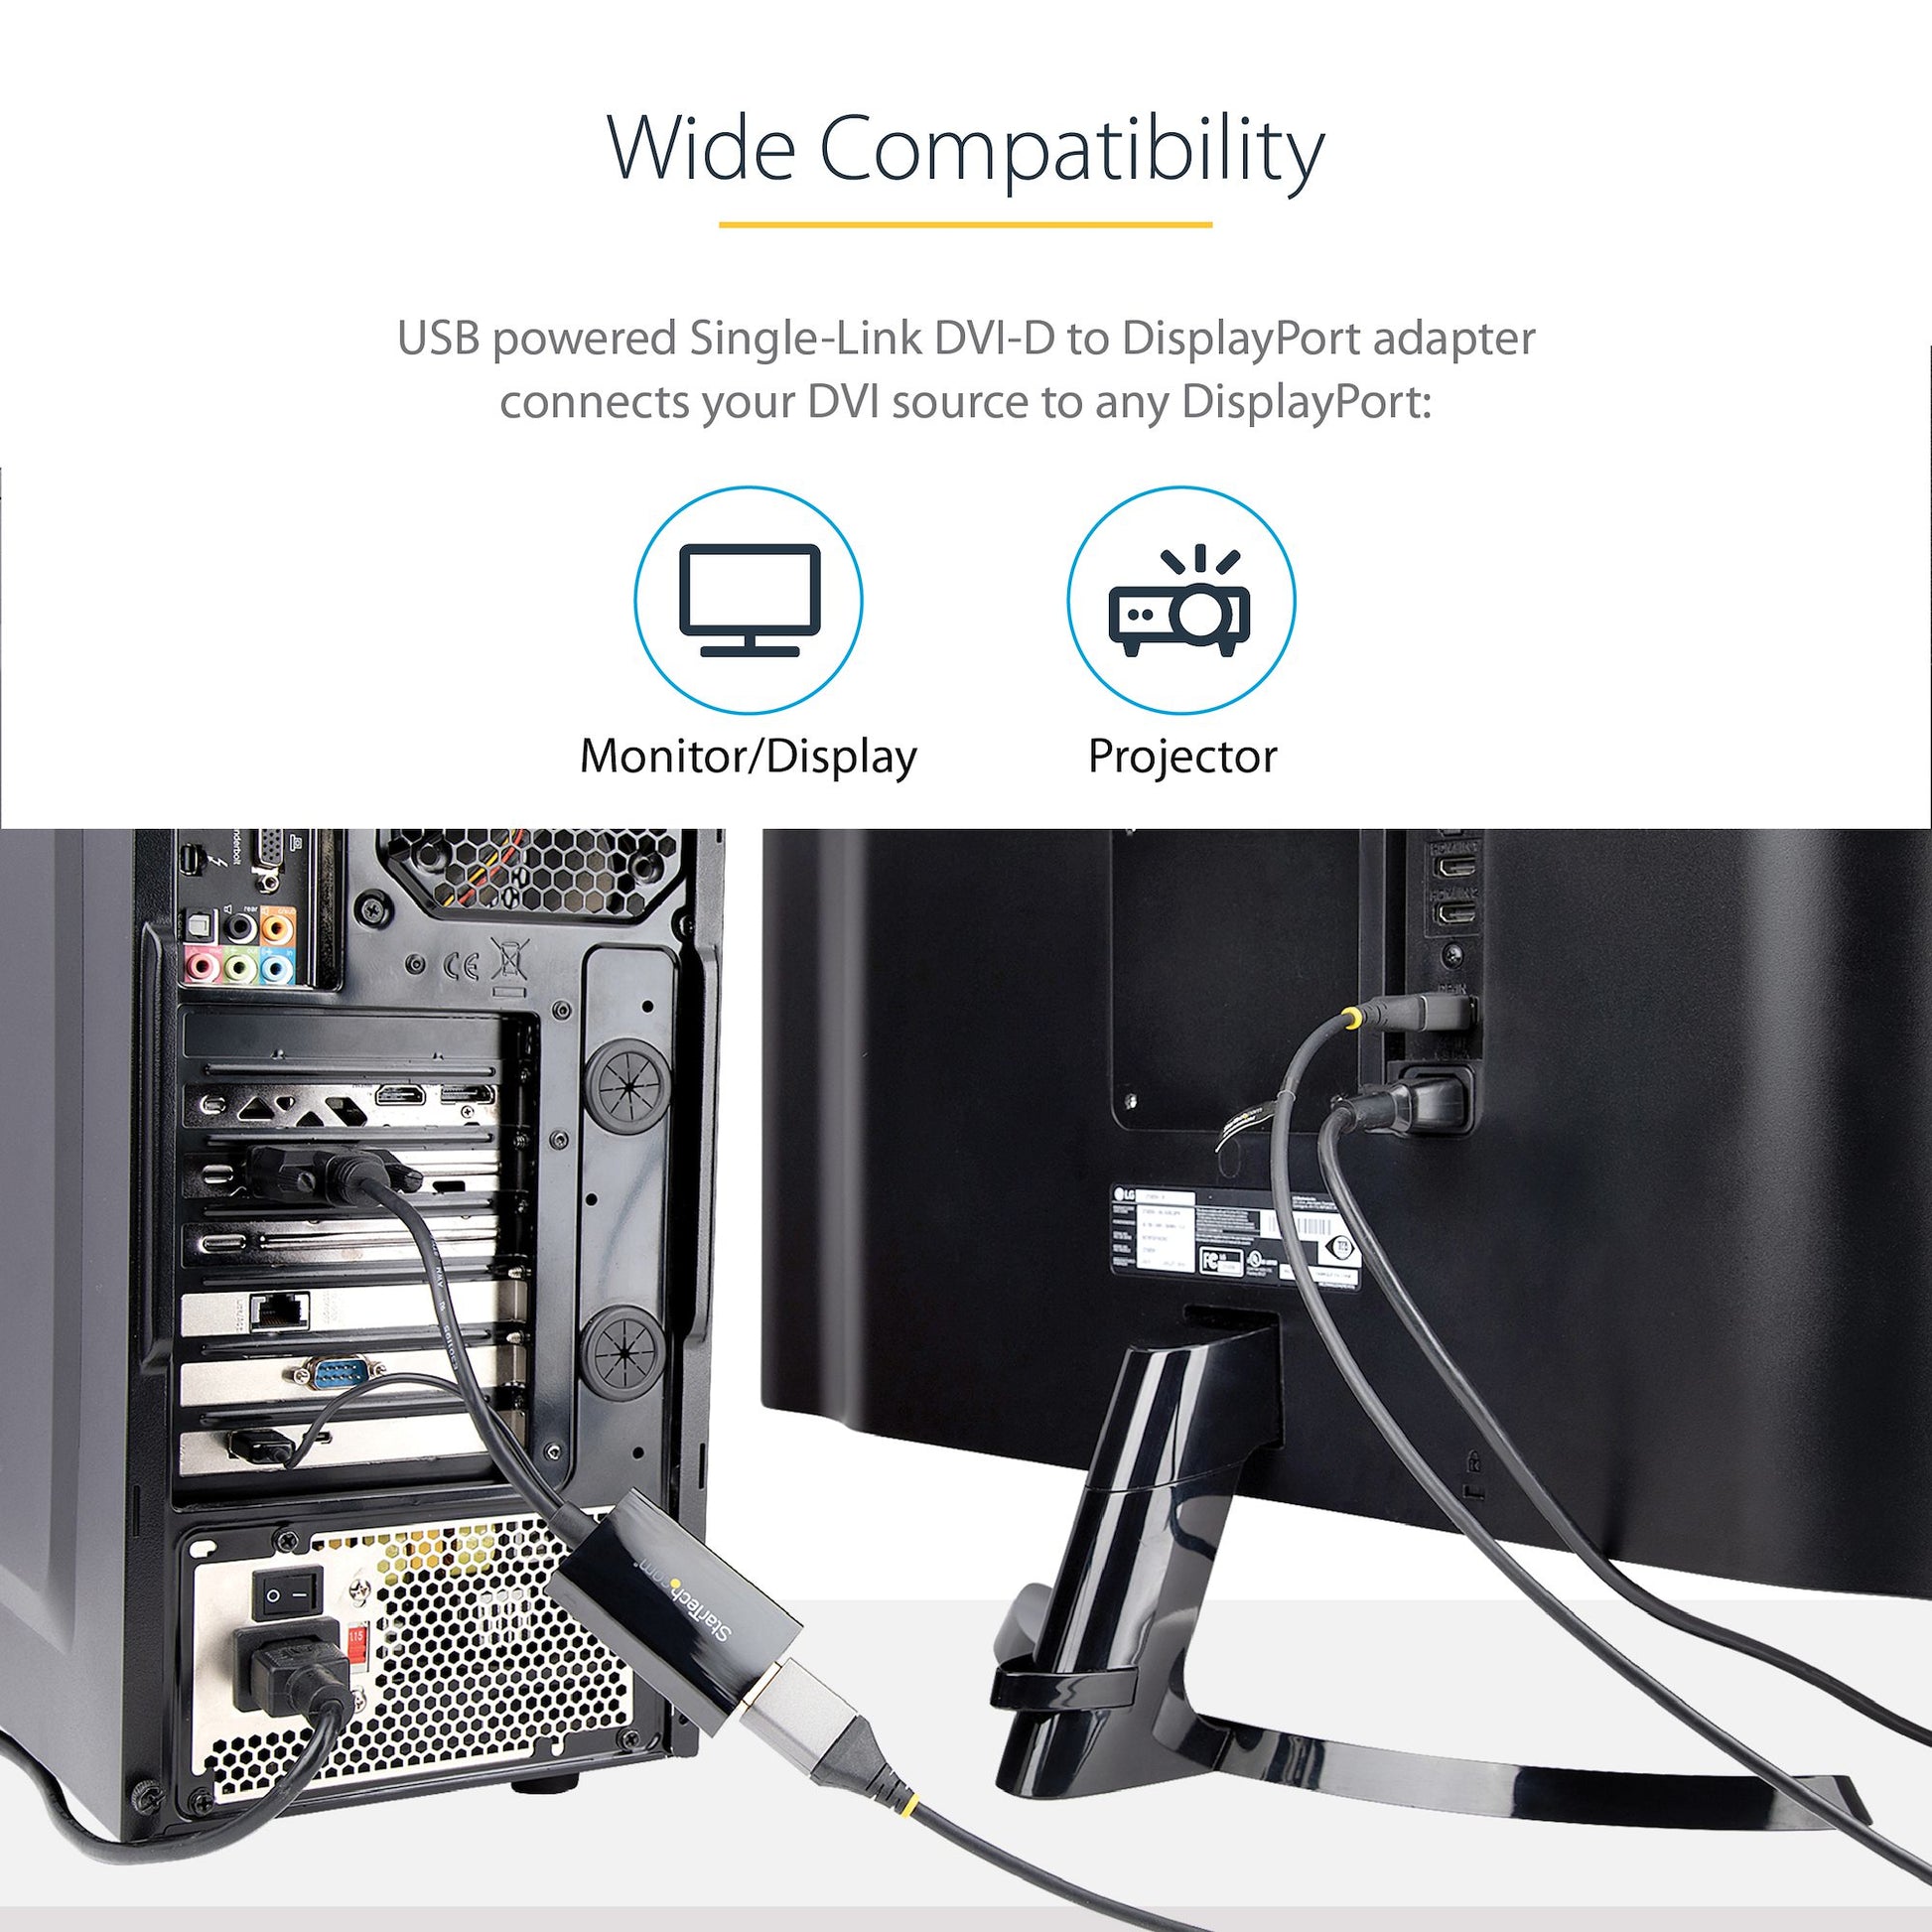 StarTech.com DVI to DisplayPort Adapter - USB Power - 1920 x 1200 - DVI to DisplayPort Converter - Video Adapter - DVI-D to DP-9